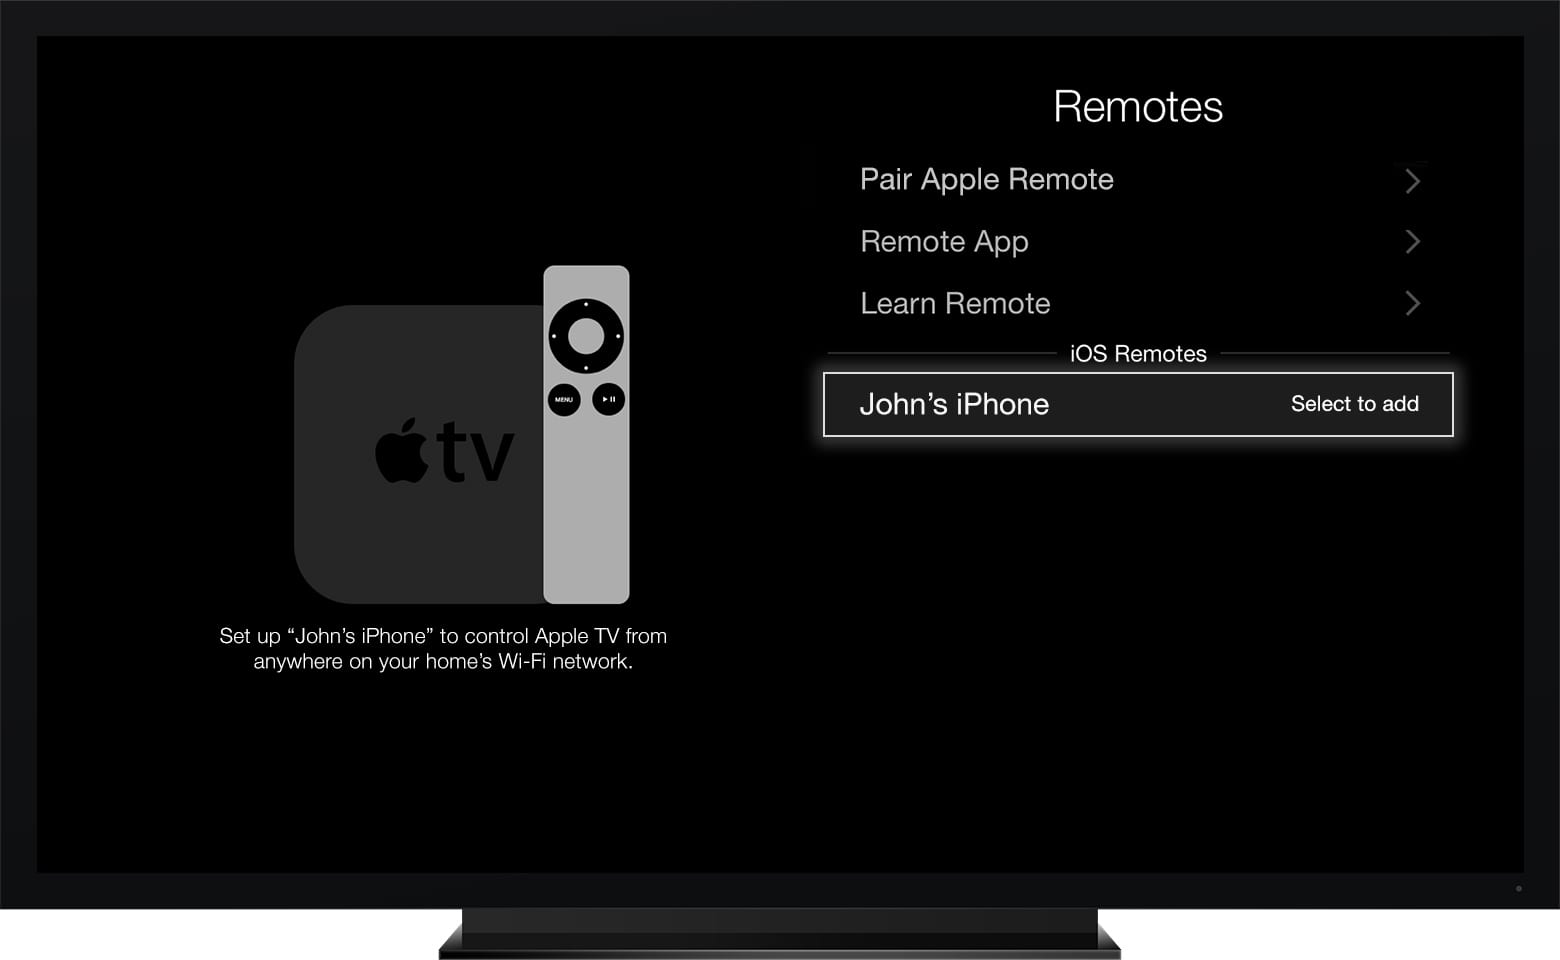 apple-tv-3gen-pair-remote